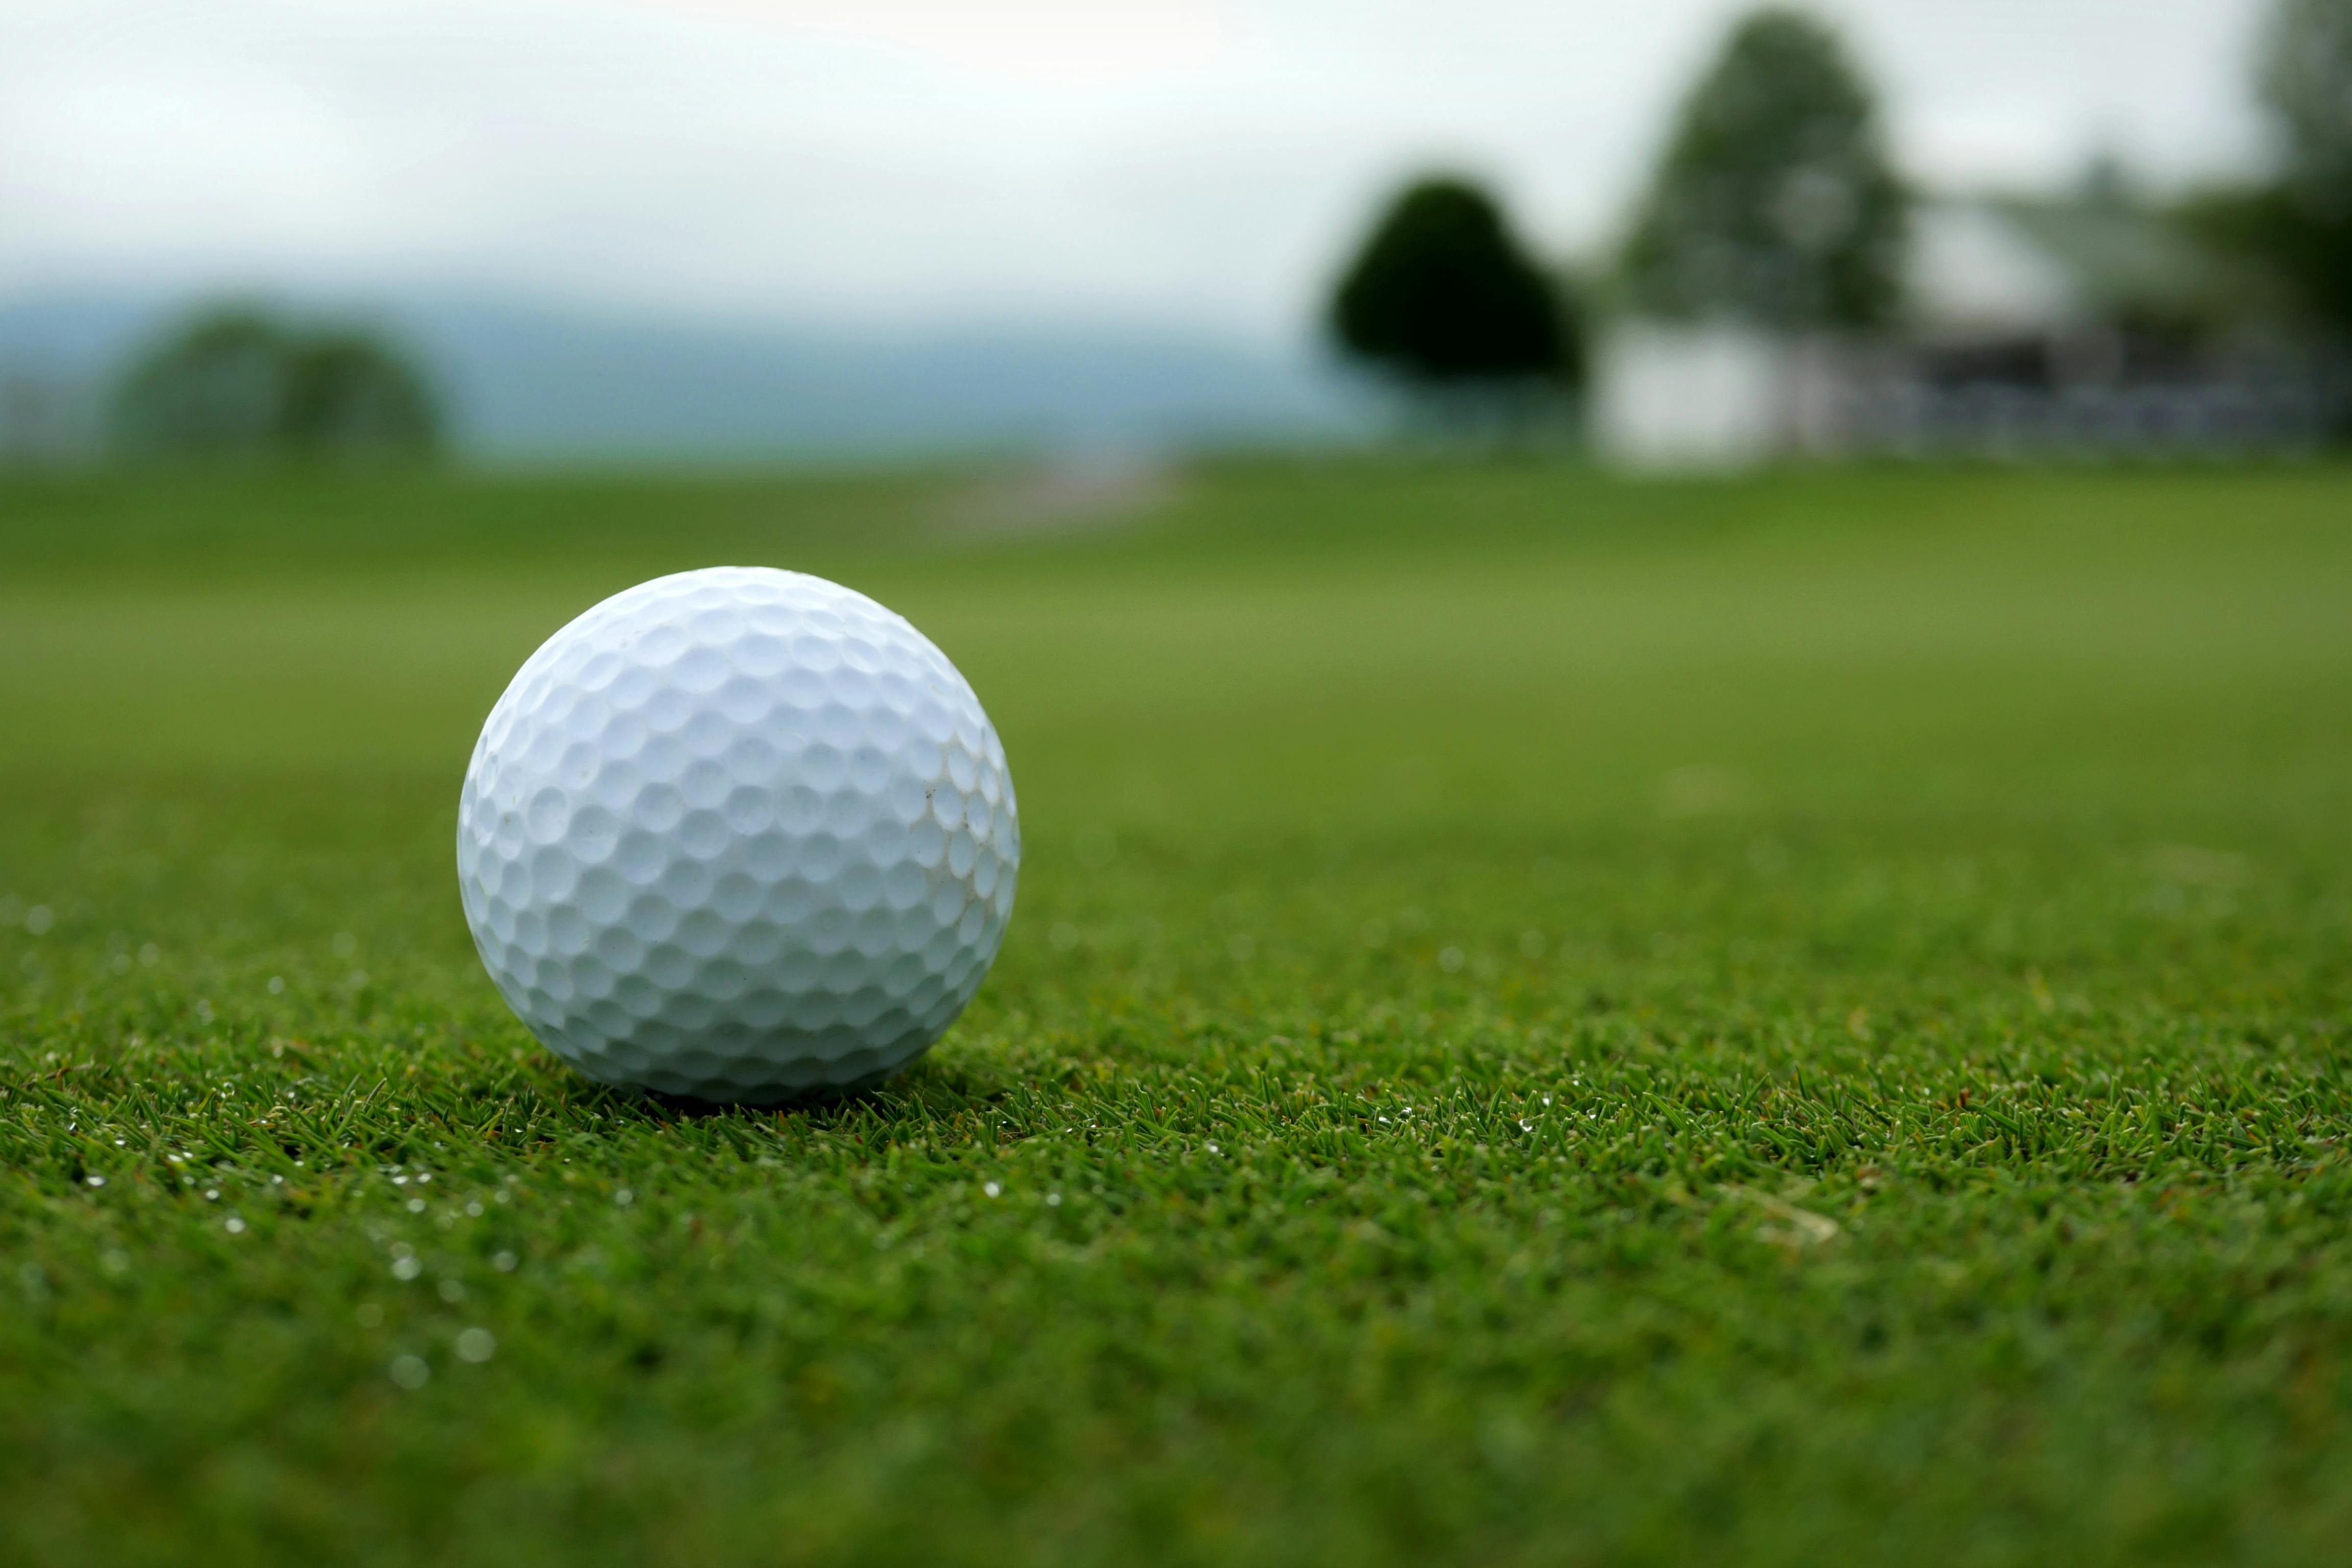 White Golf Ball on Green Grass Field · Free Stock Photo